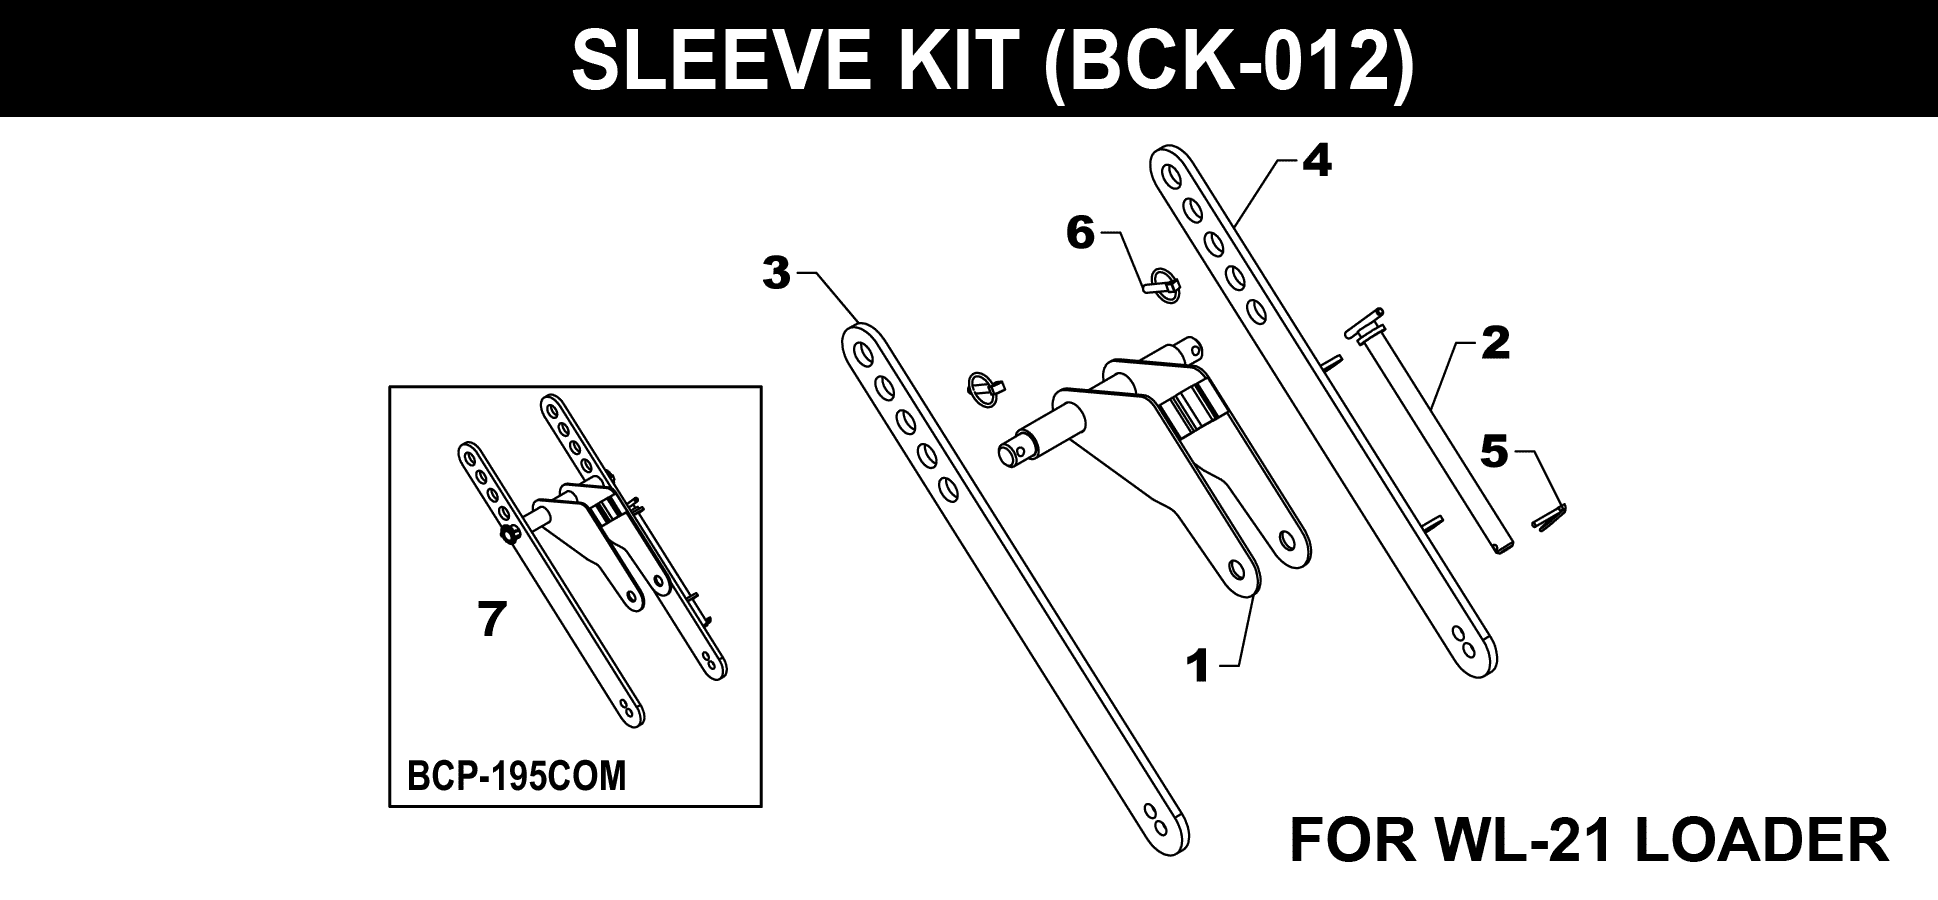 BCK-012 Sleeve Kit